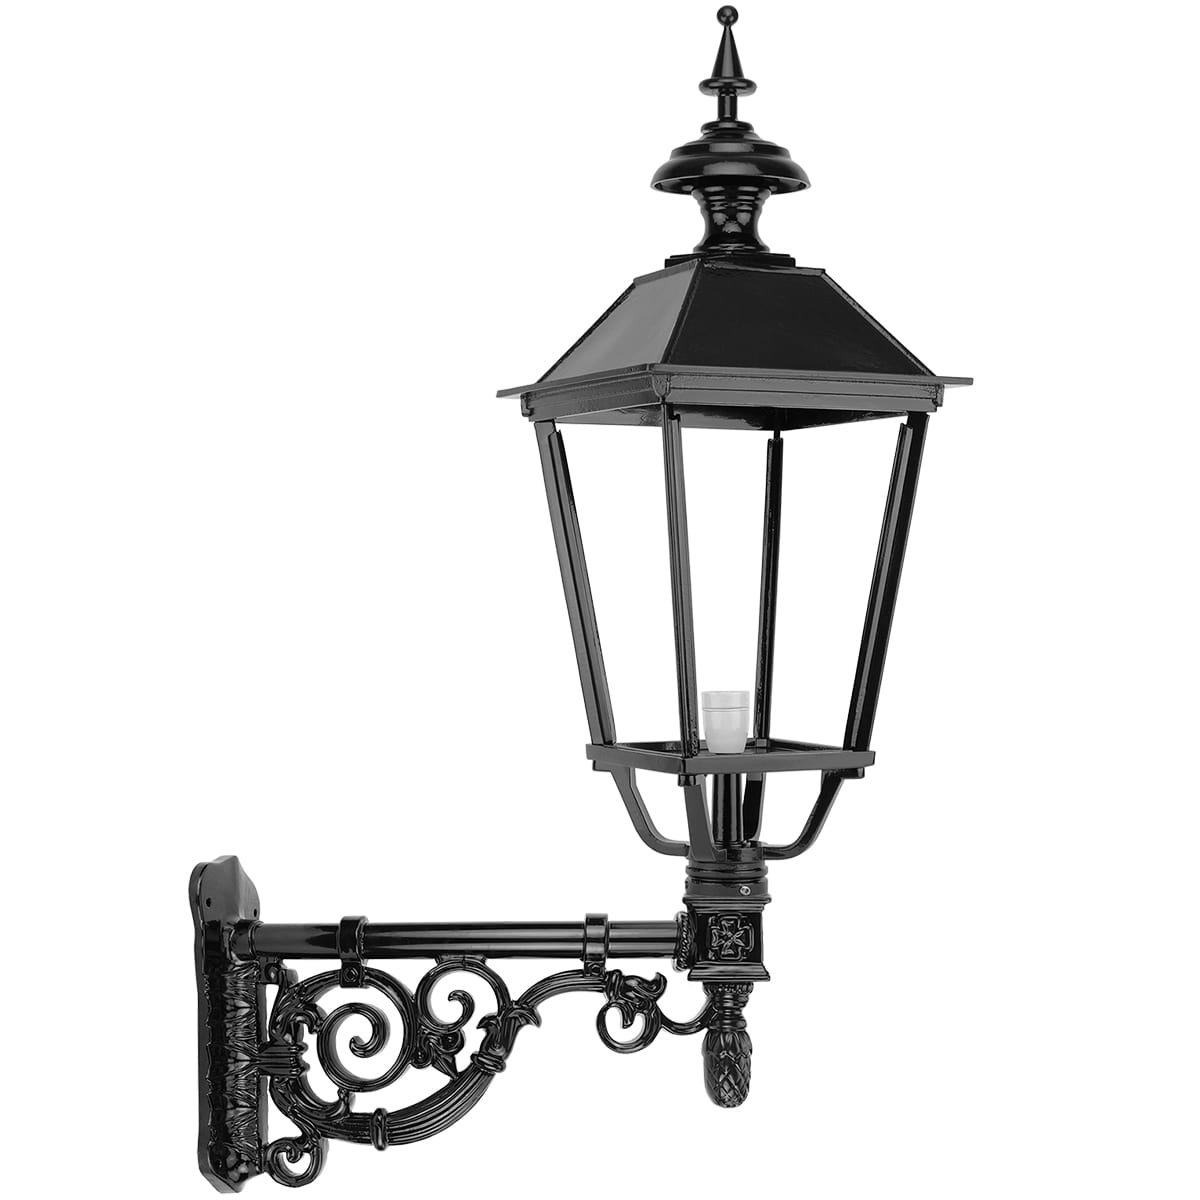 Outdoor Lighting Classic Rural Facade lantern old style Pijnacker - 103 cm